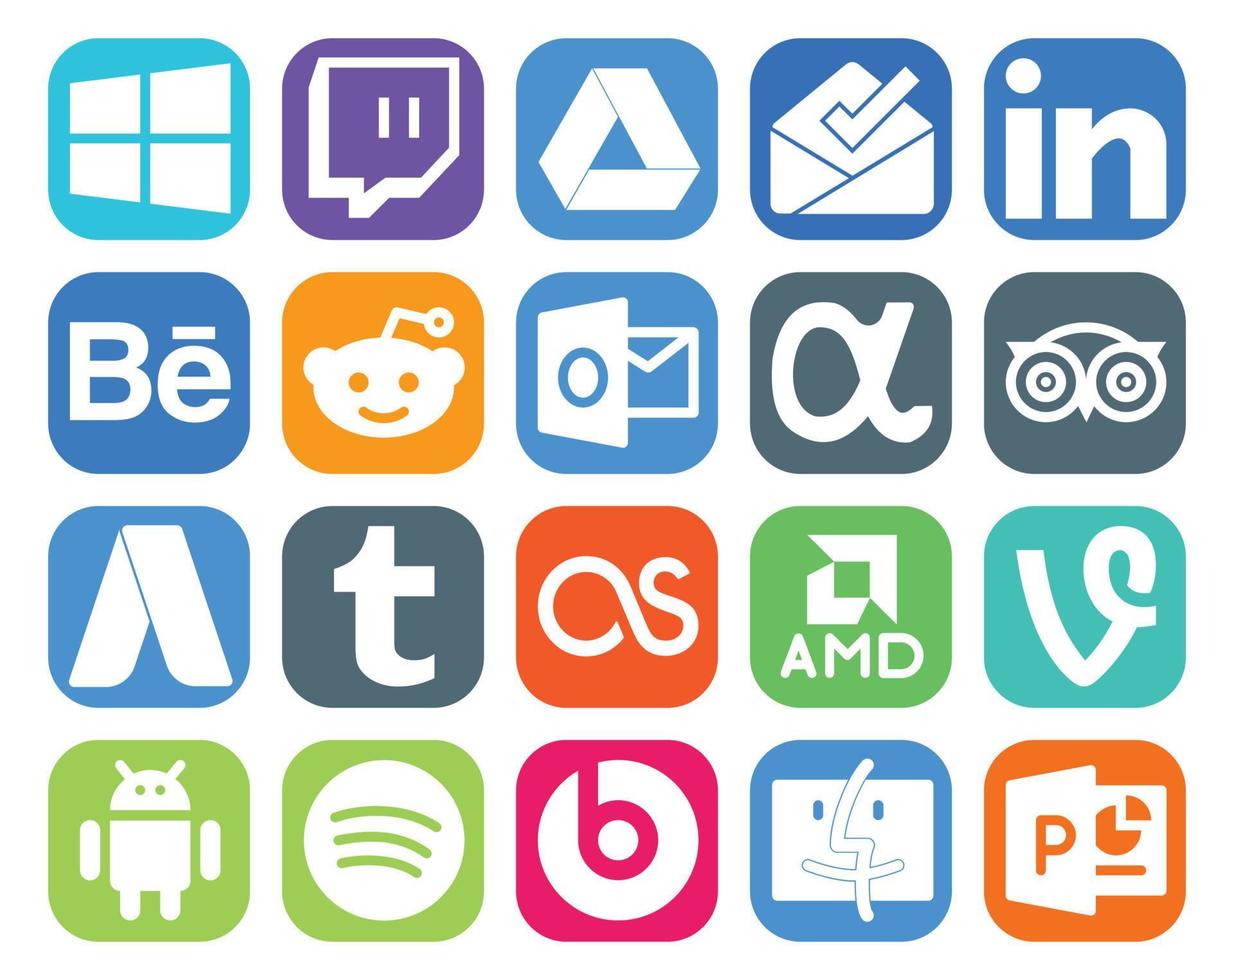 20 sociaal media icoon pak inclusief spotify Liaan app netto amd tumblr vector